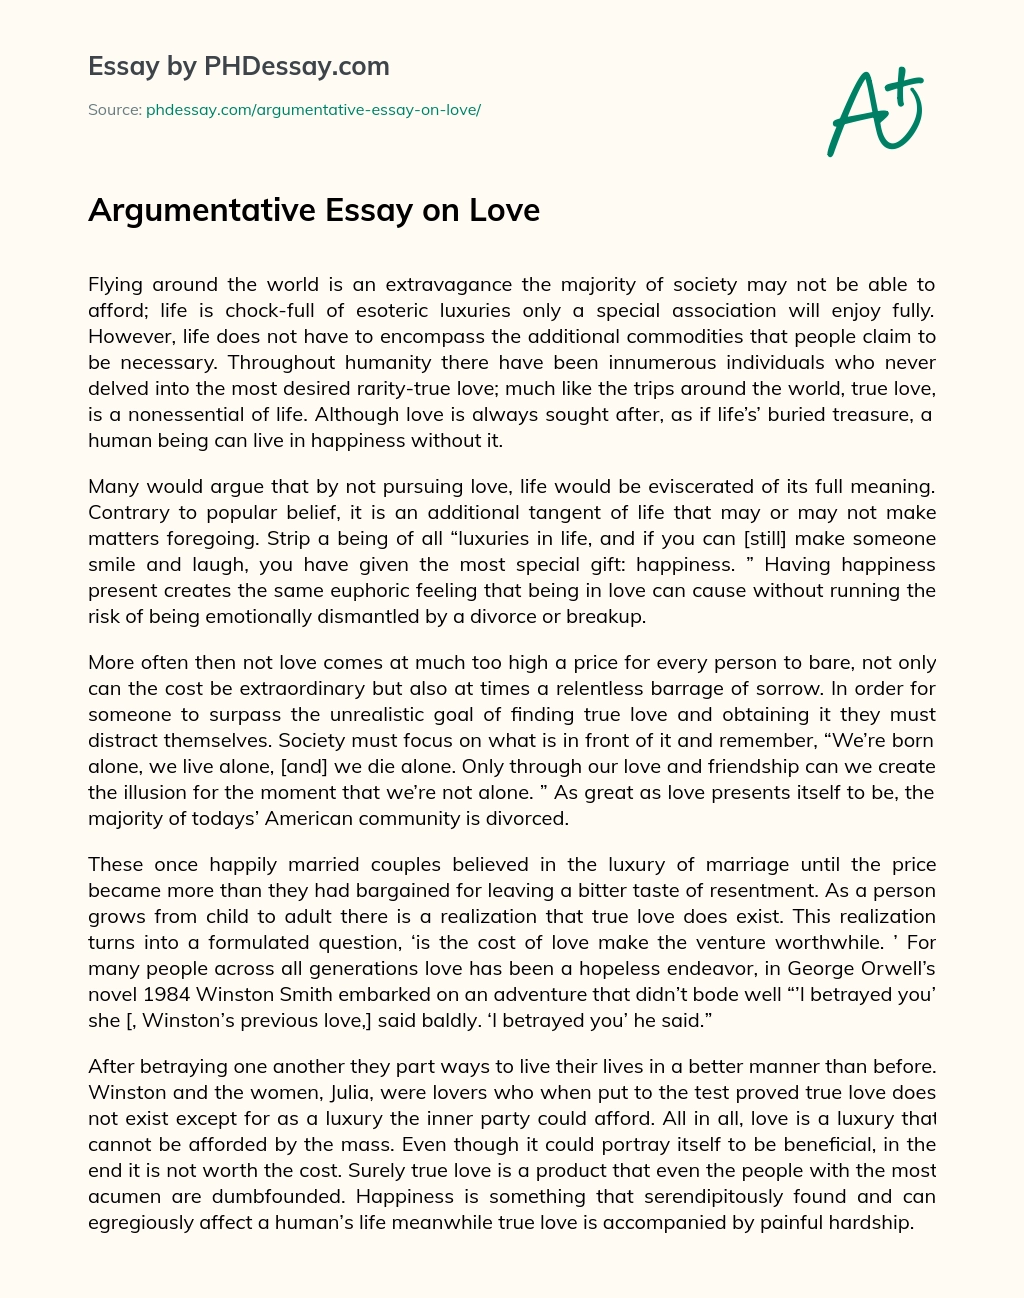 Argumentative Essay on Love